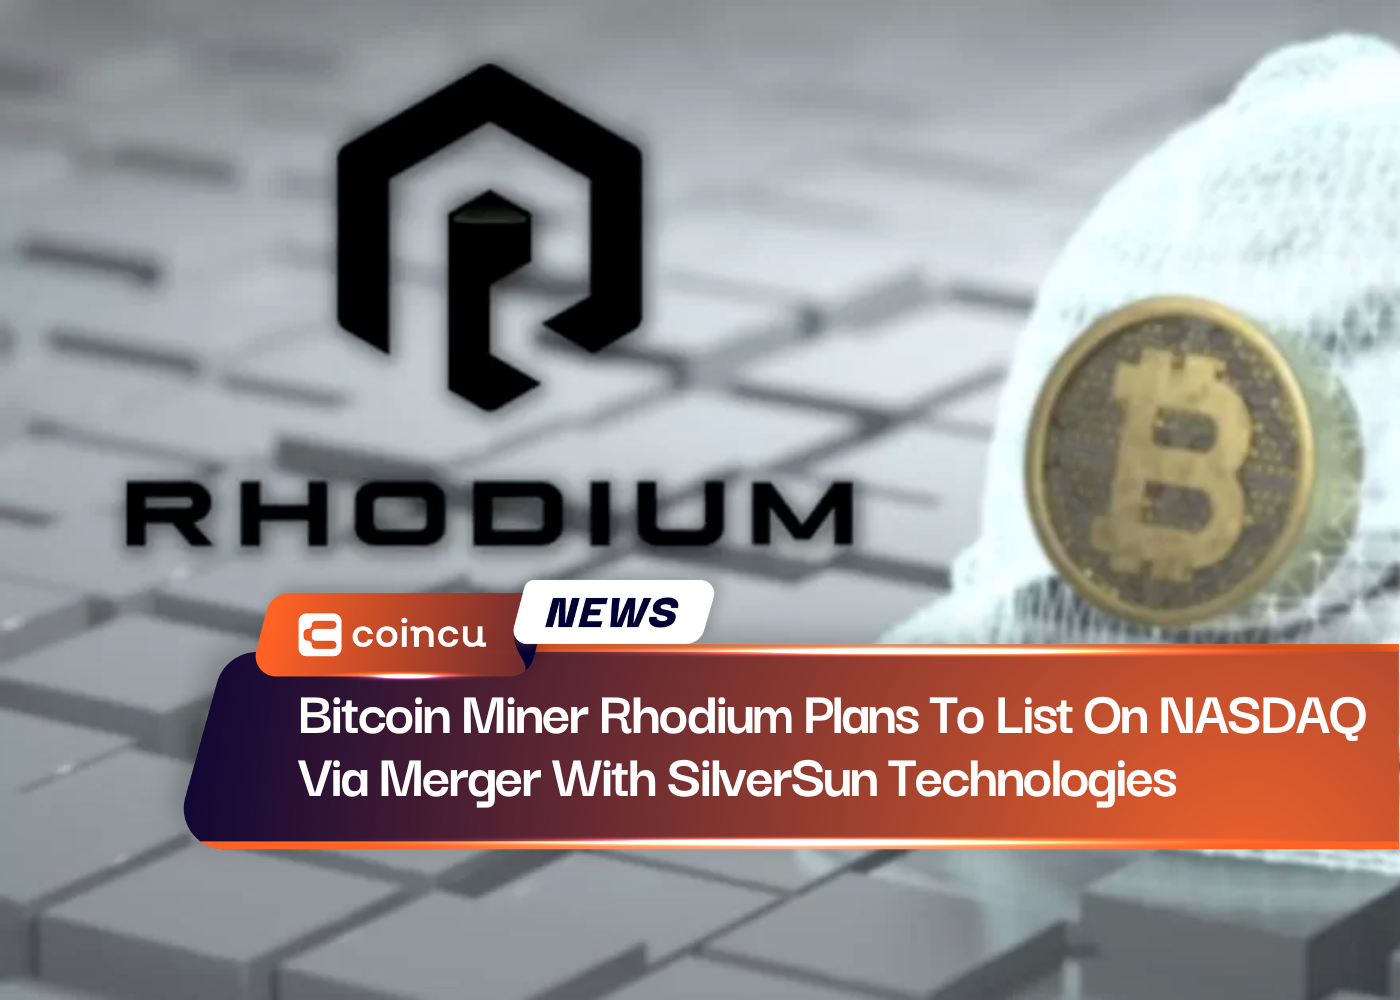 Bitcoin Miner Rhodium Plans To List On NASDAQ Via Merger With SilverSun Technologies